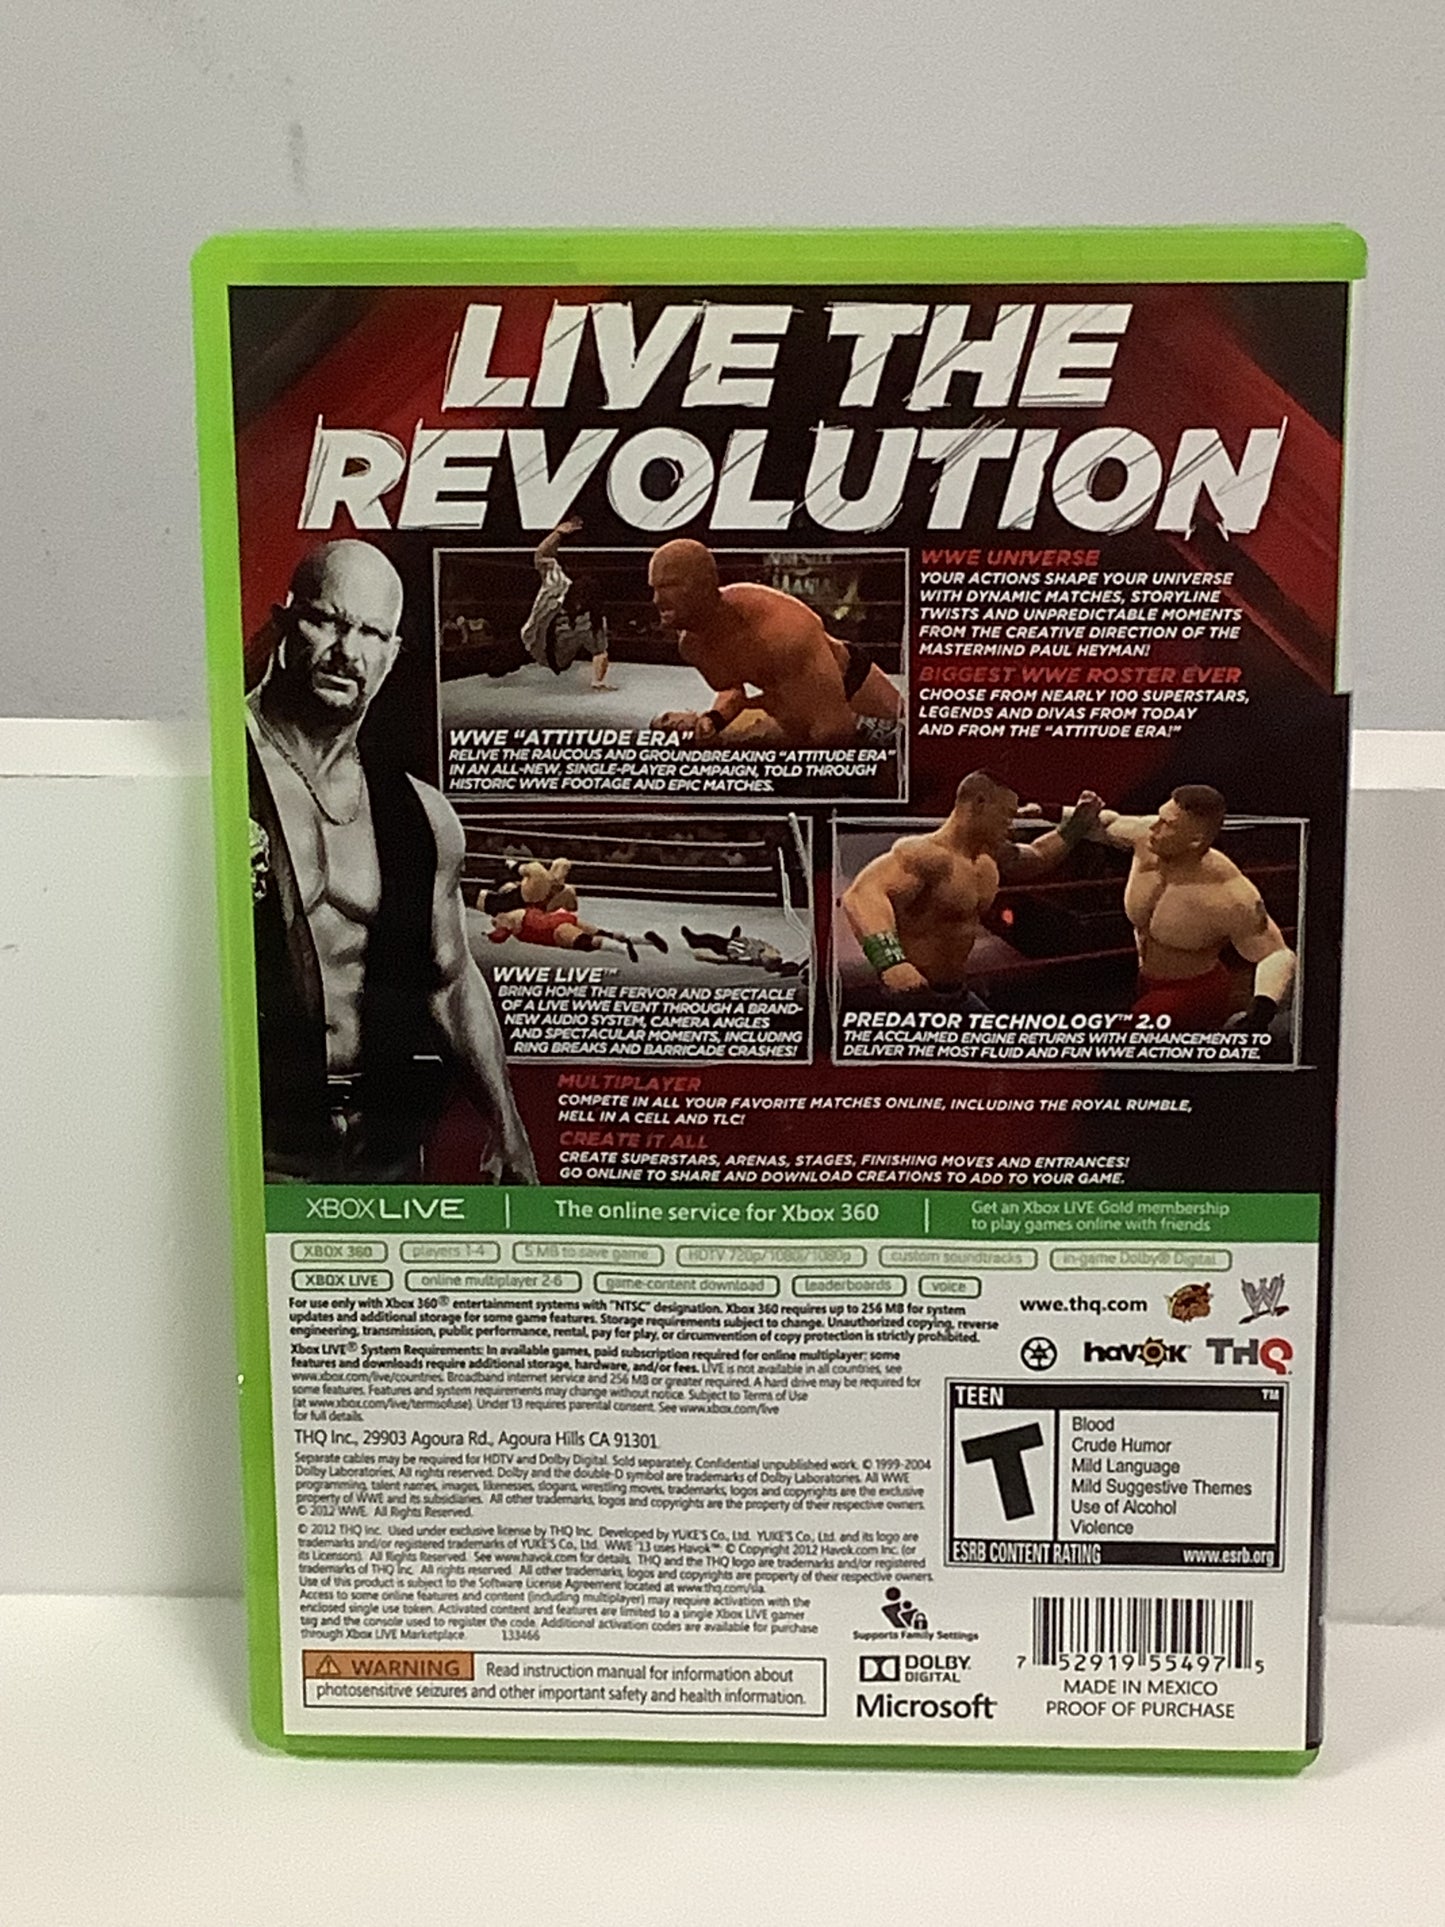 WWE '13 - Xbox 360